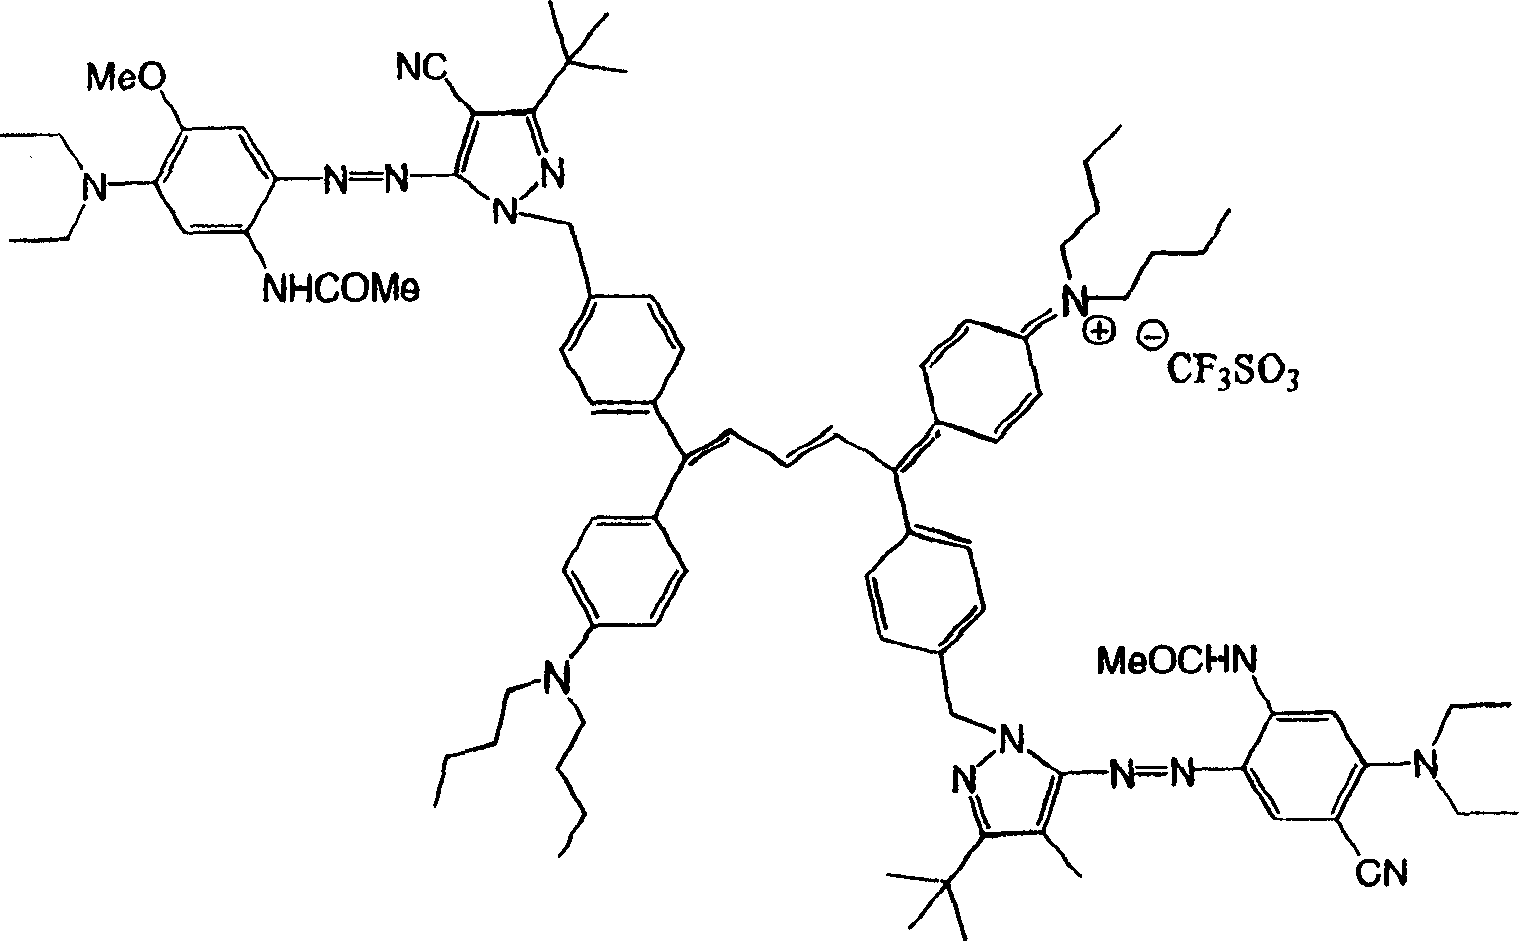 Twin chromophore molecule